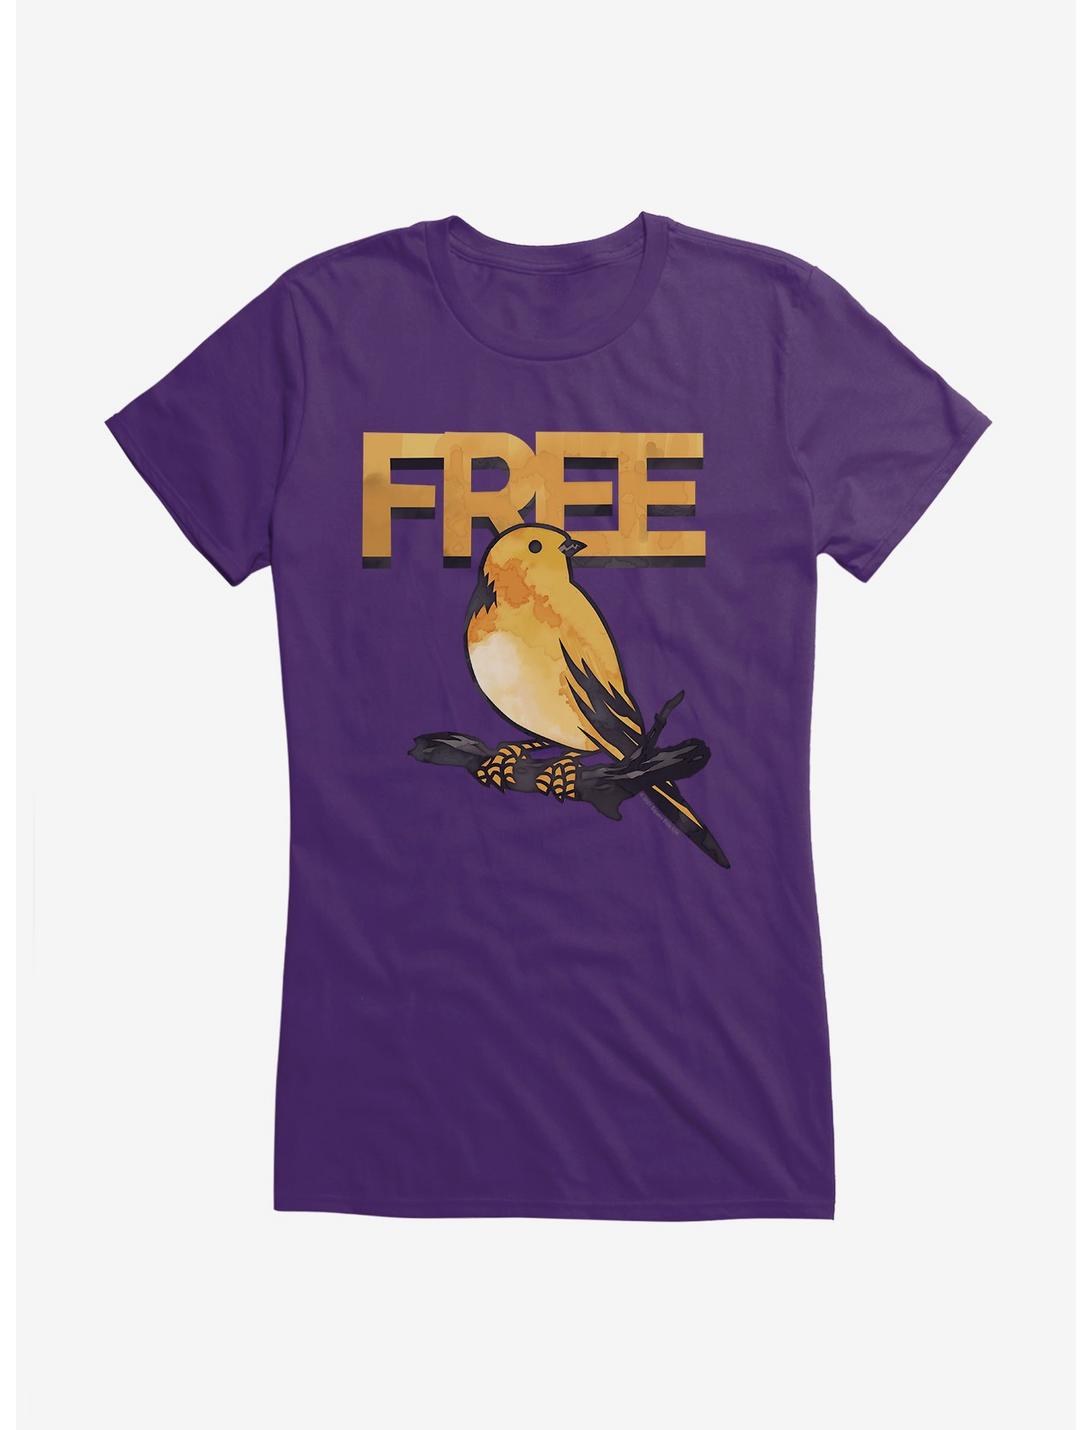 Square Enix Free Bird Girls T-Shirt, PURPLE, hi-res